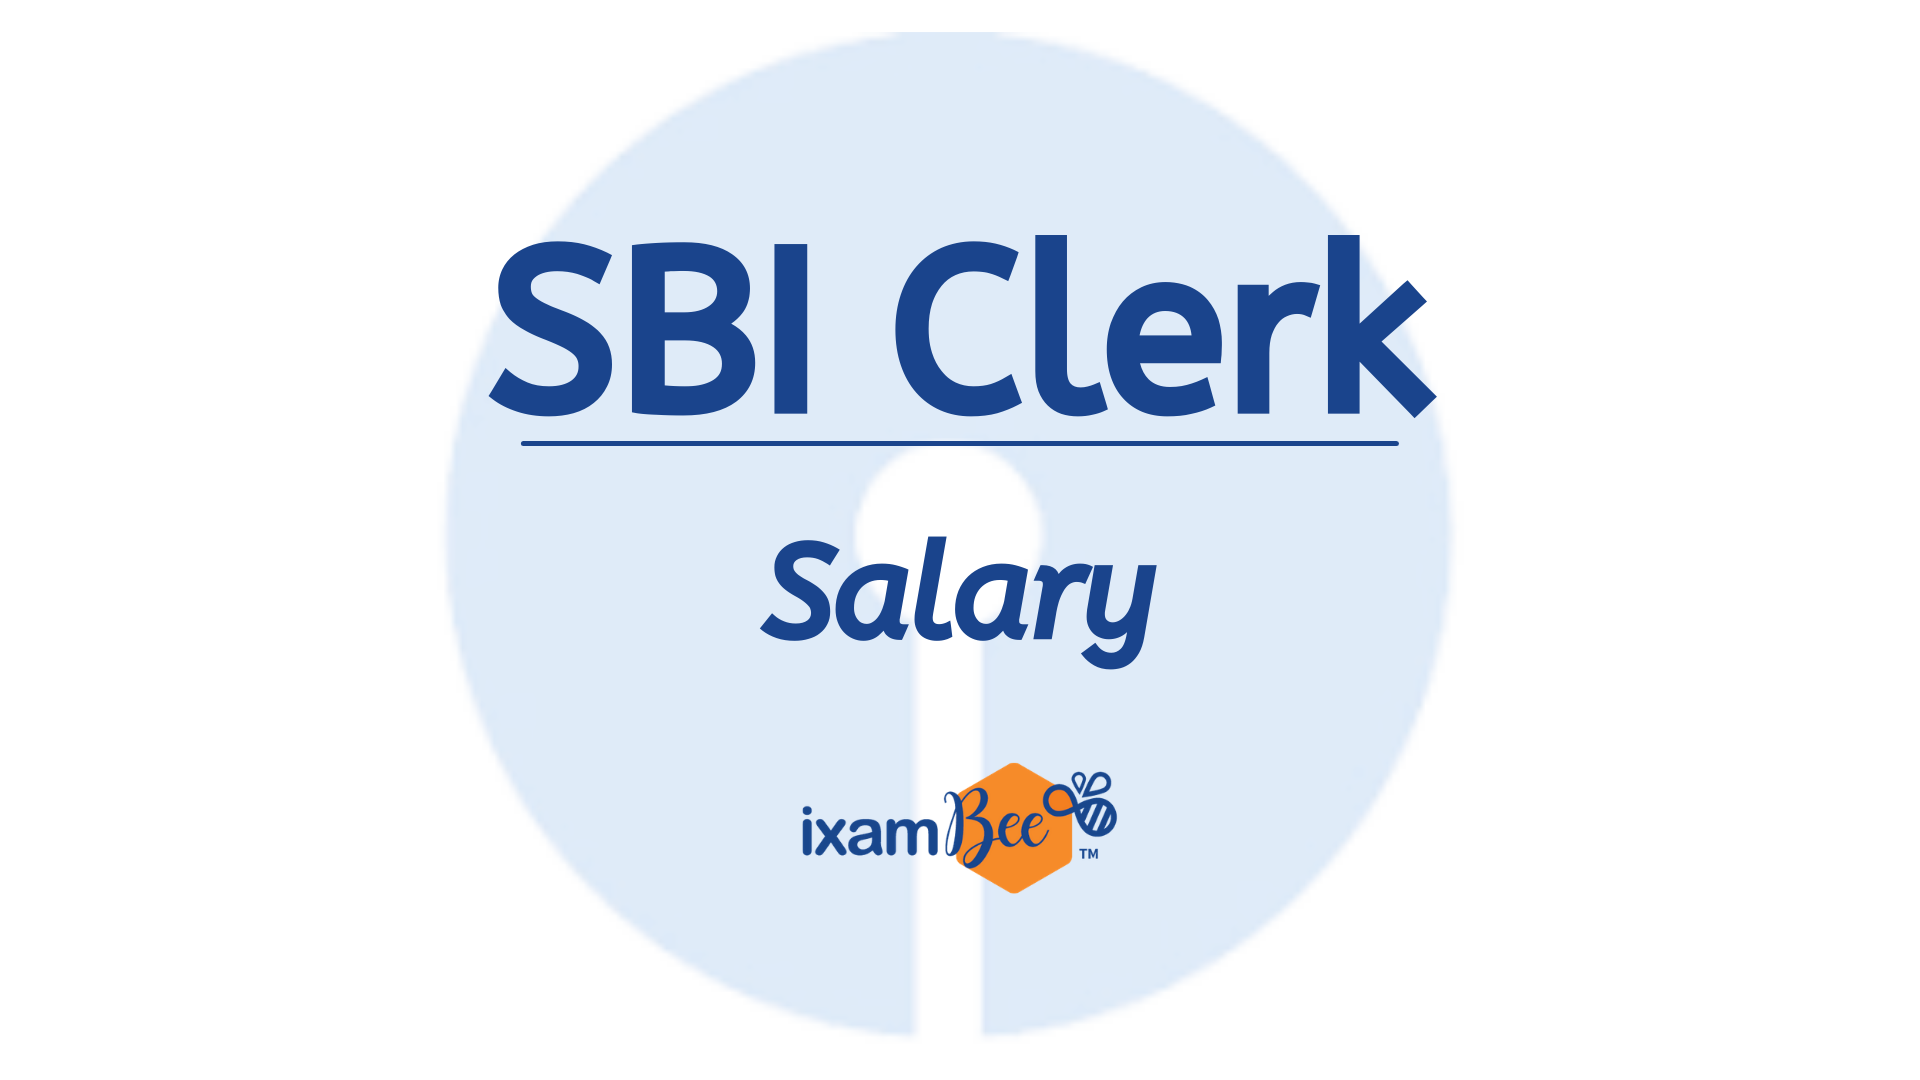 SBI Clerk Salary 2021